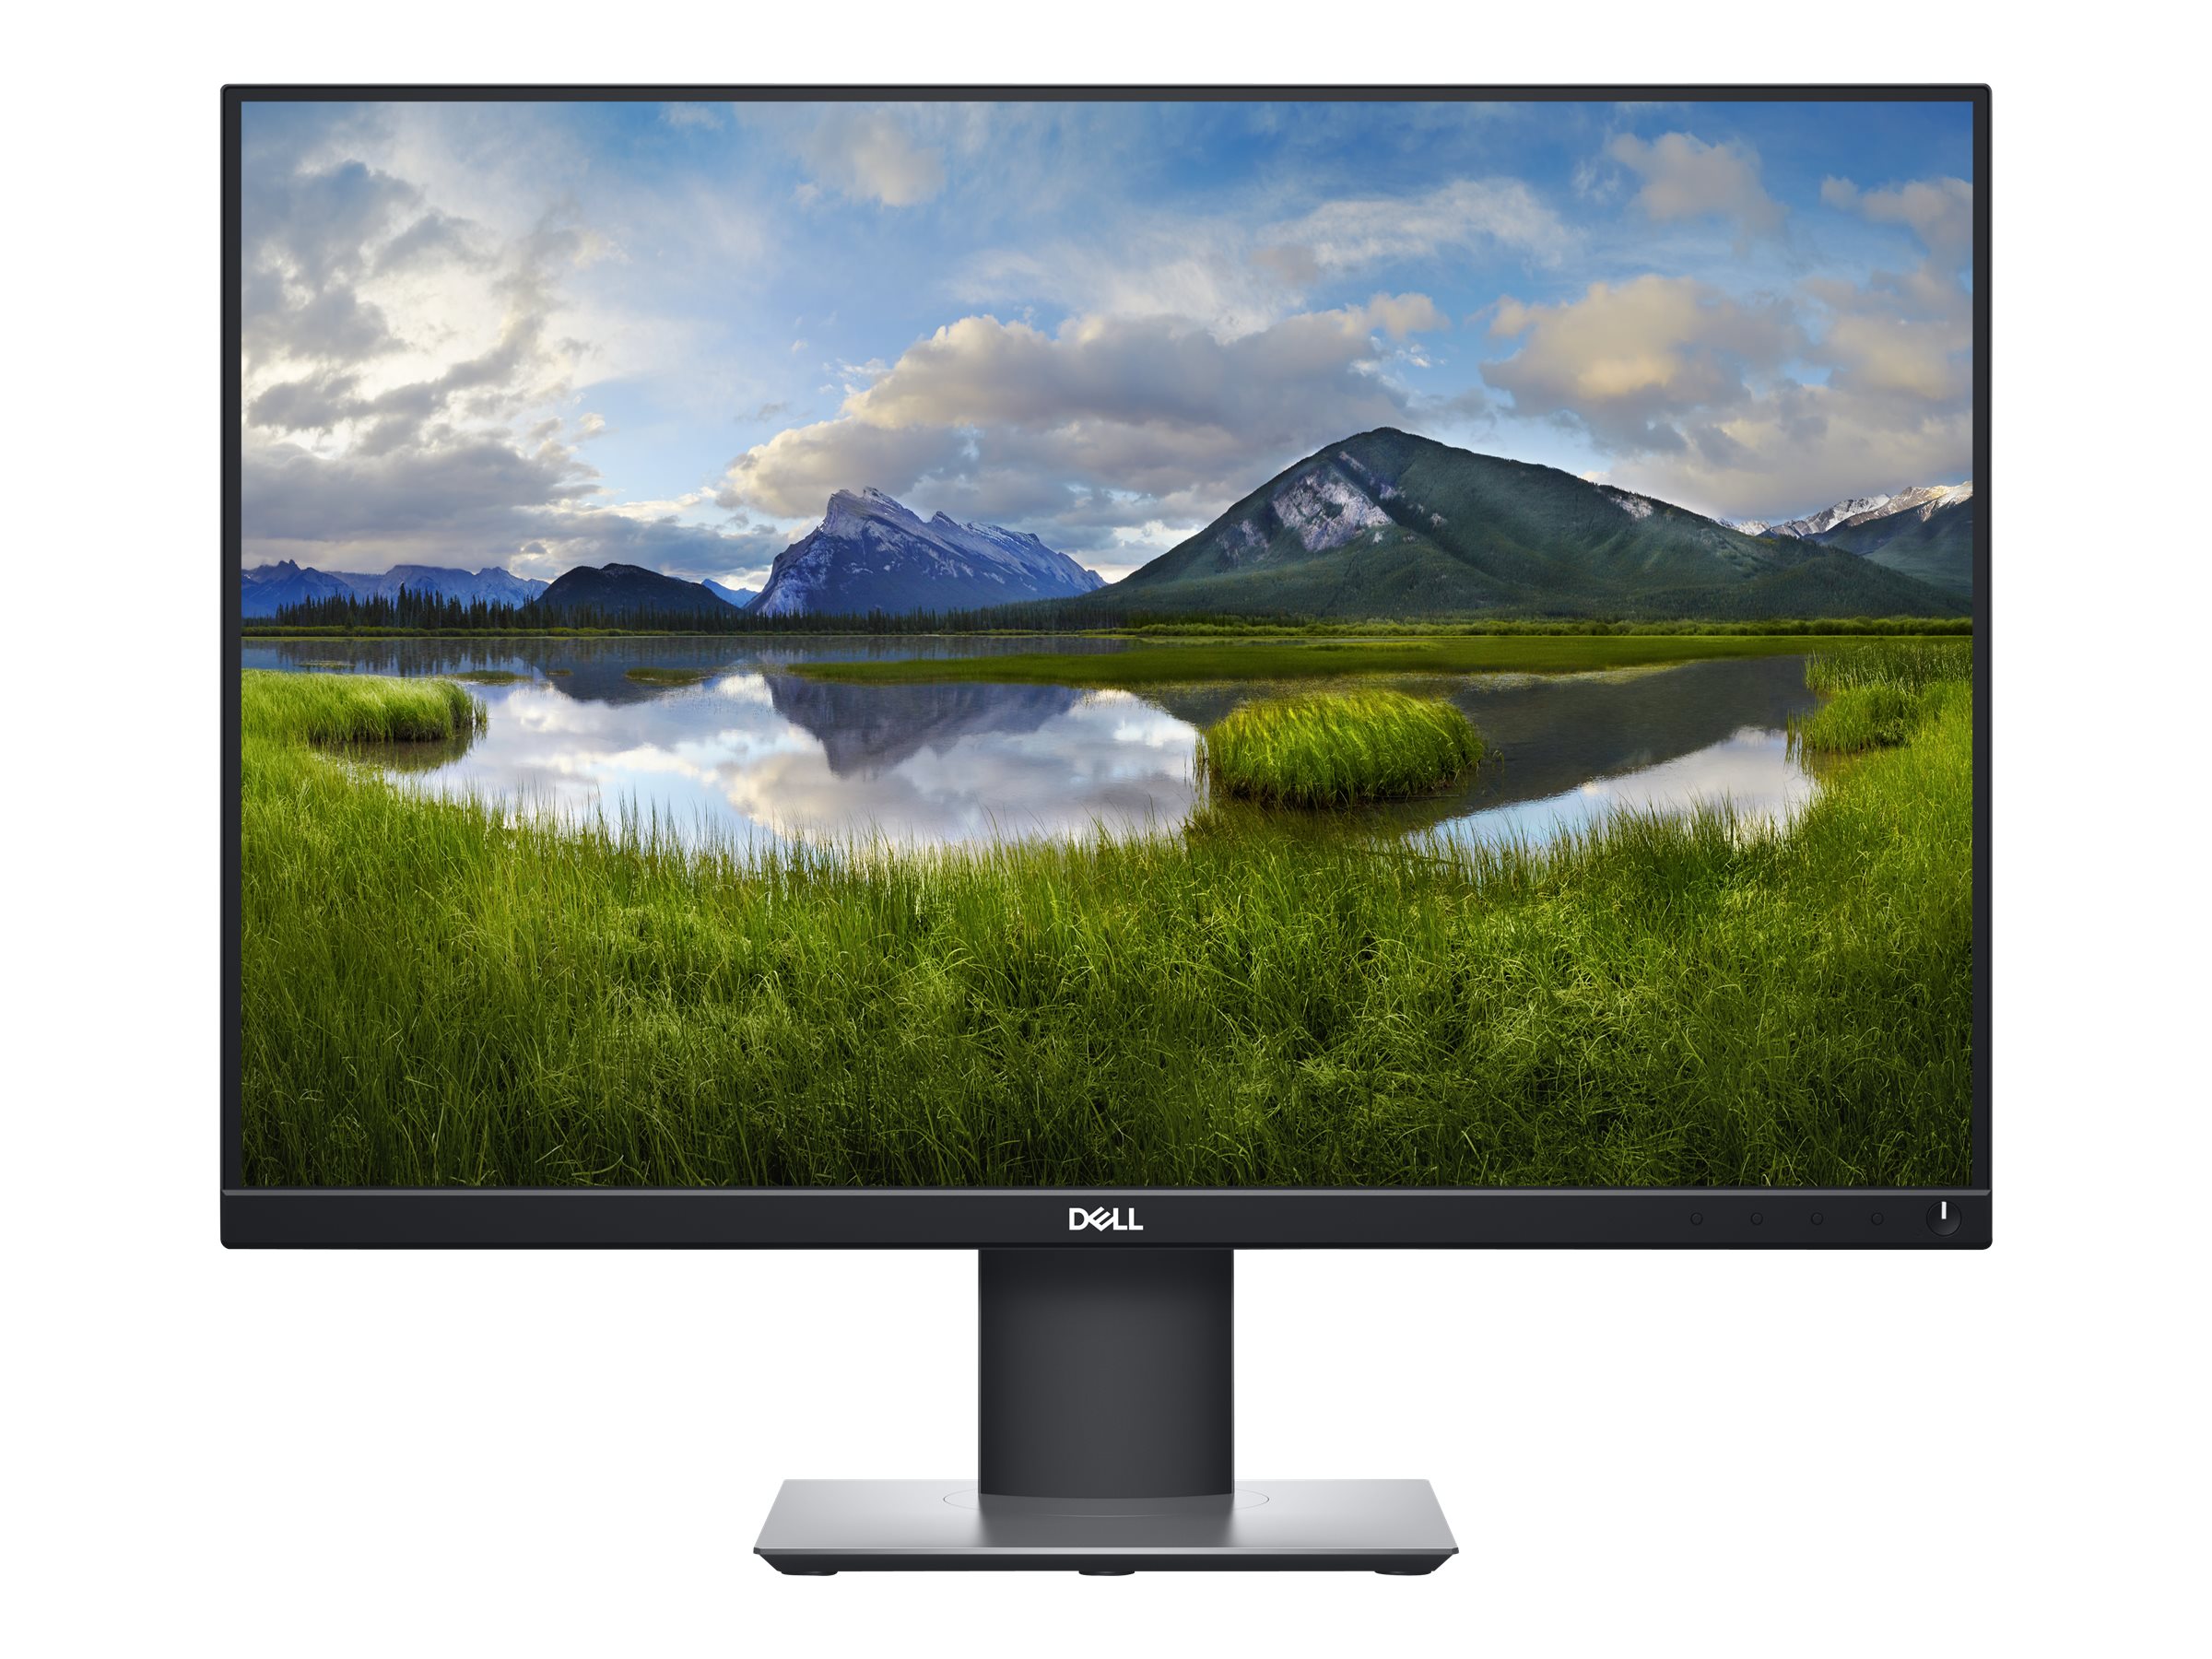 Dell P2421 - LED-Monitor - 61.13 cm (24.1") (24.1" sichtbar)